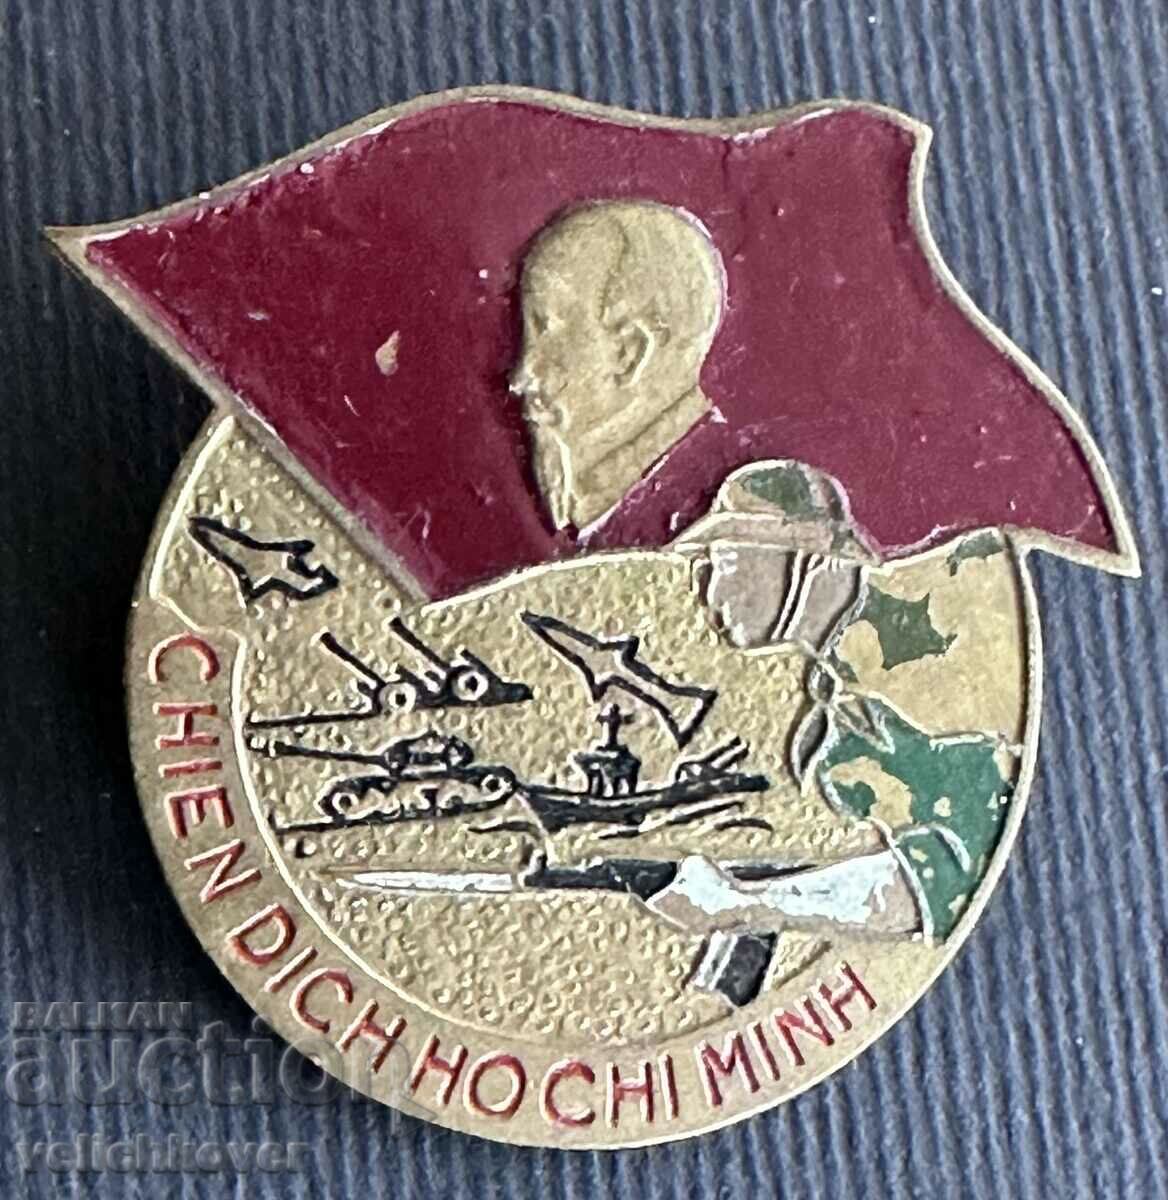 36325 Vietnam military badge period Vietnam War 70s